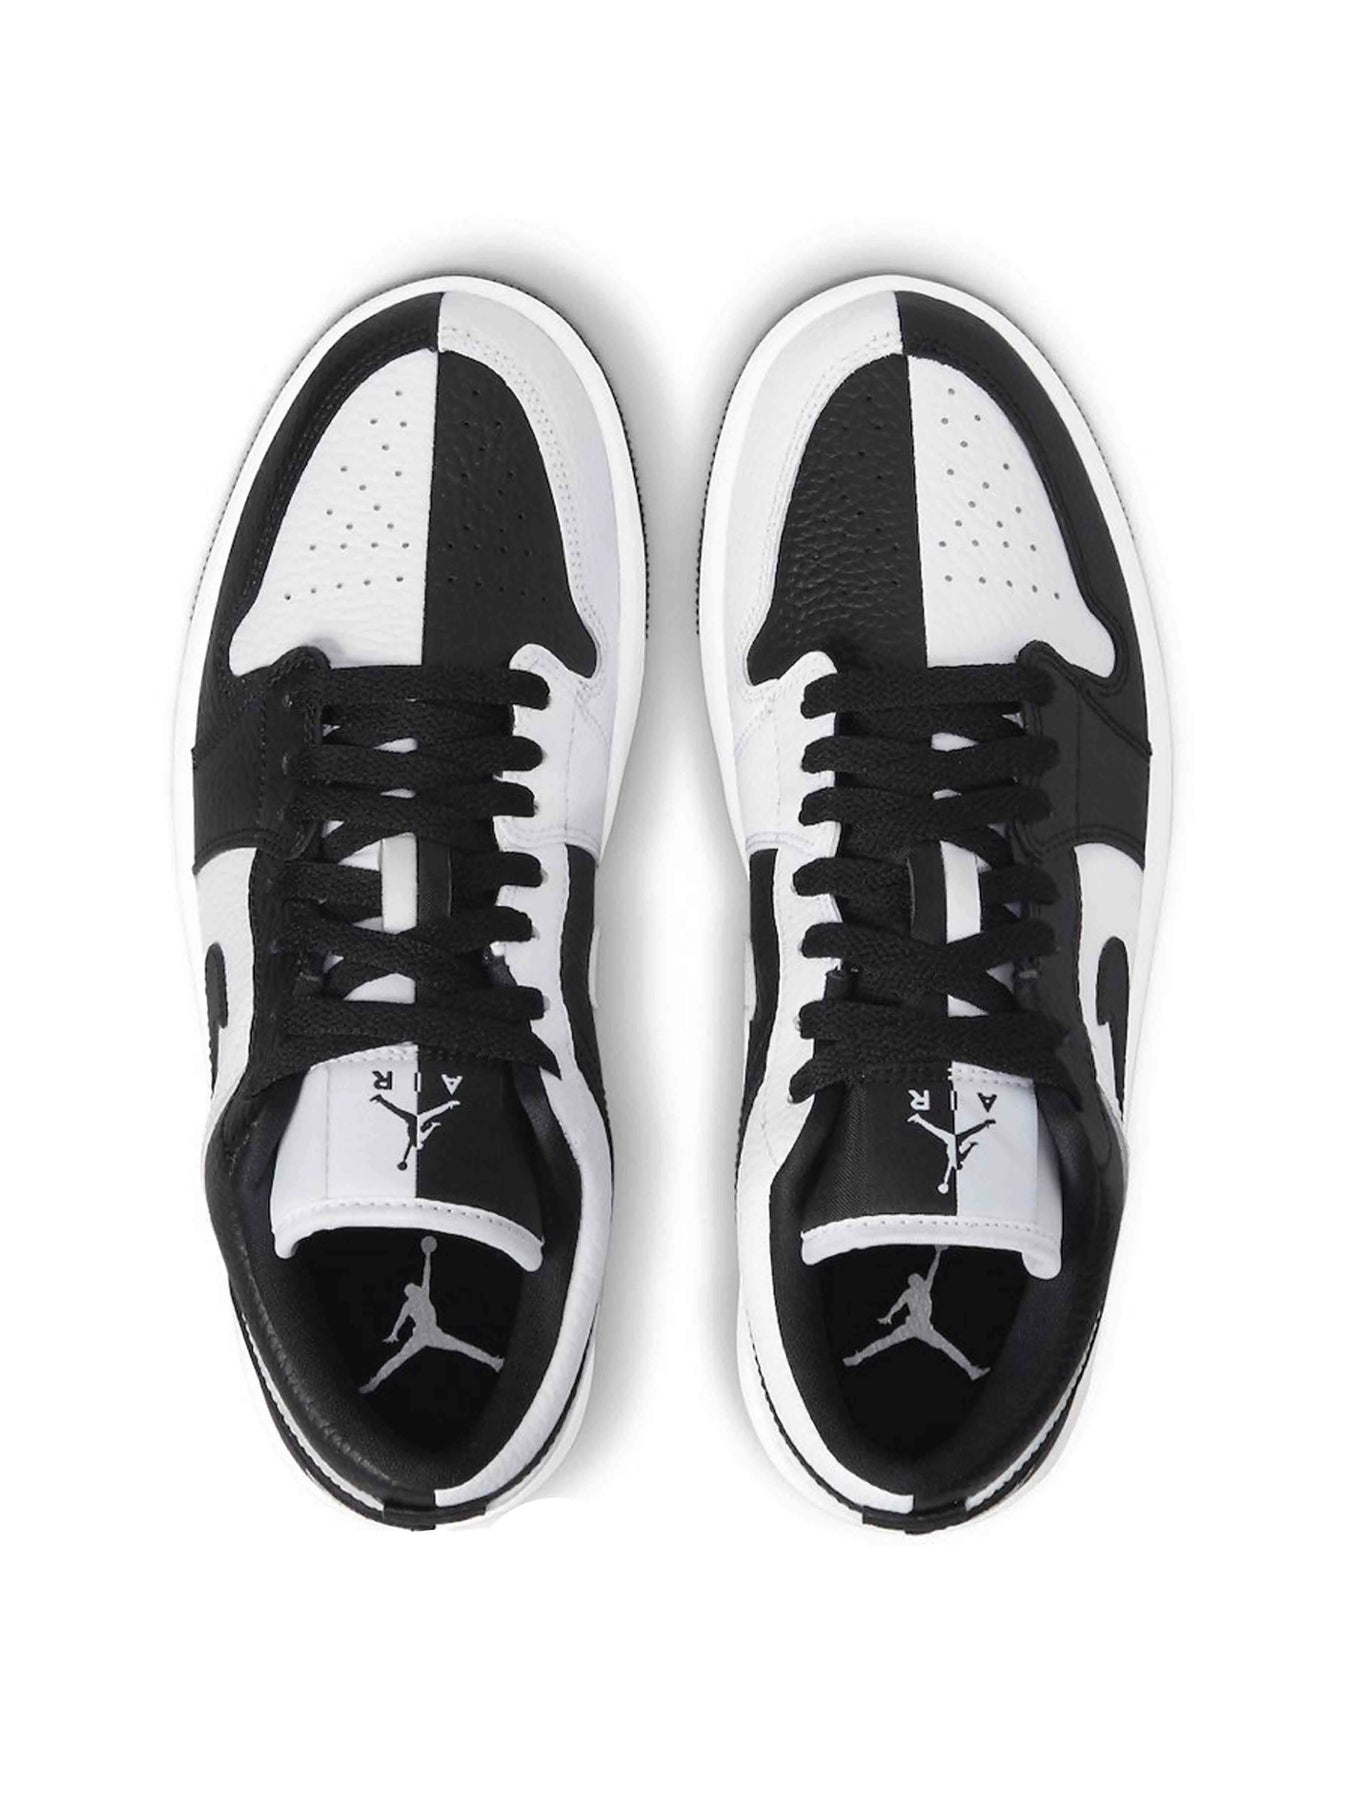 Nike Air Jordan 1 Low SE Homage Split White Black [W] - Prior